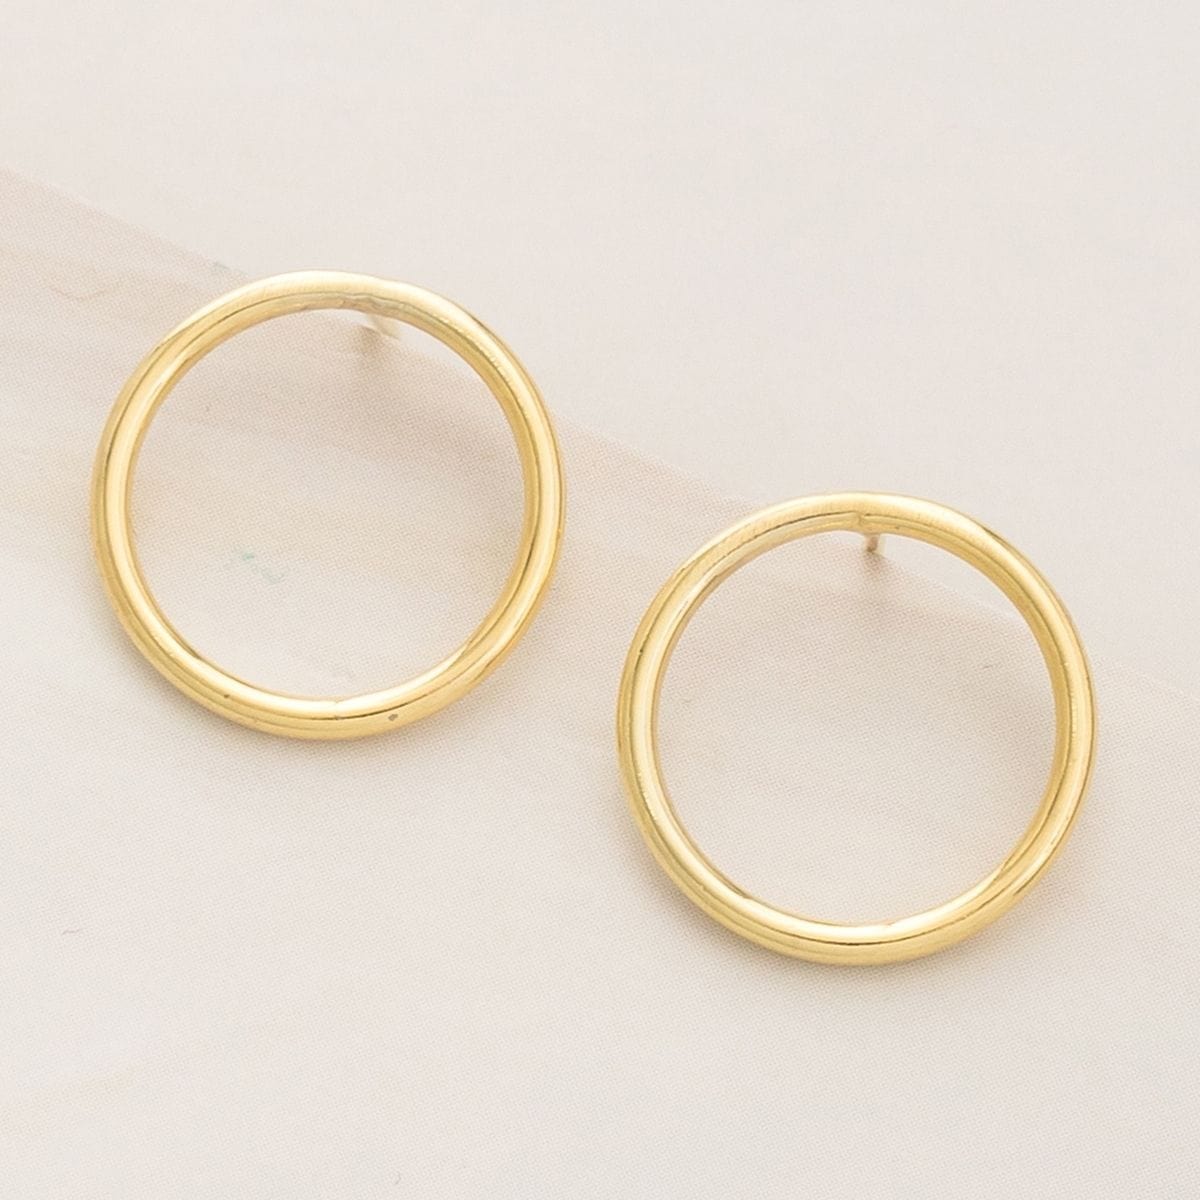 Emblem Jewelry Earrings Gold Tone Modern Geometry Circle Stud Earrings